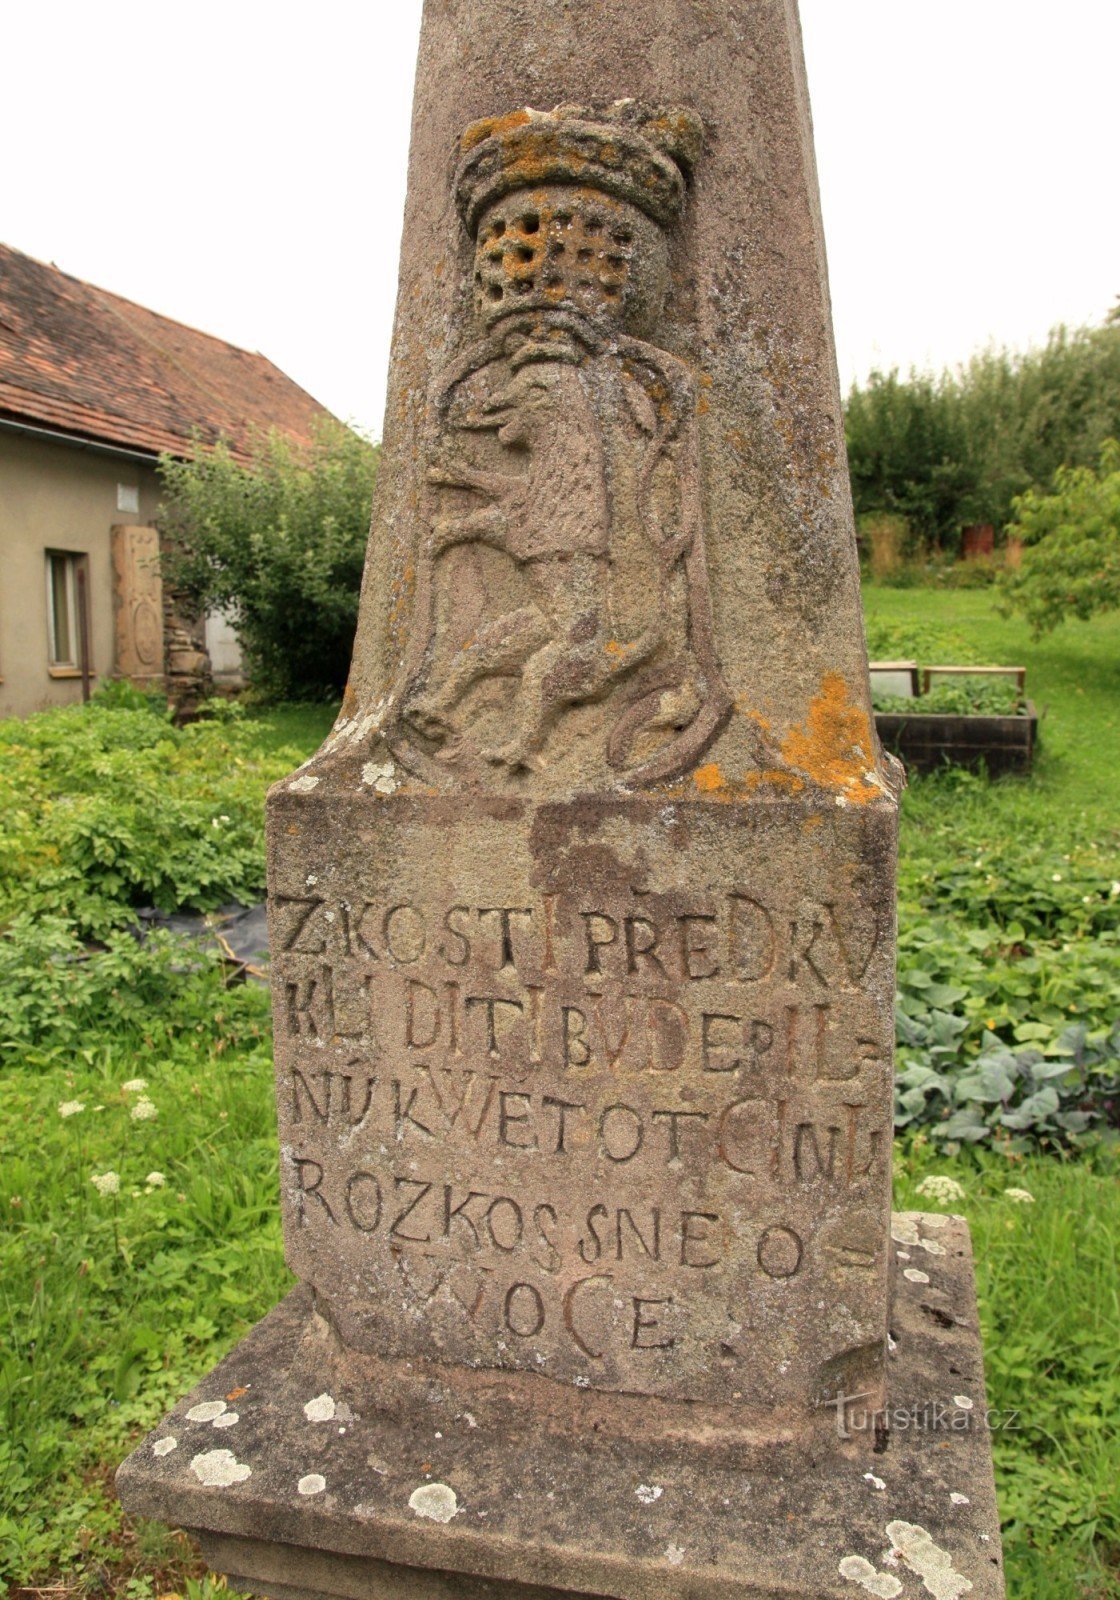 Detail of the inscription on the obelisk